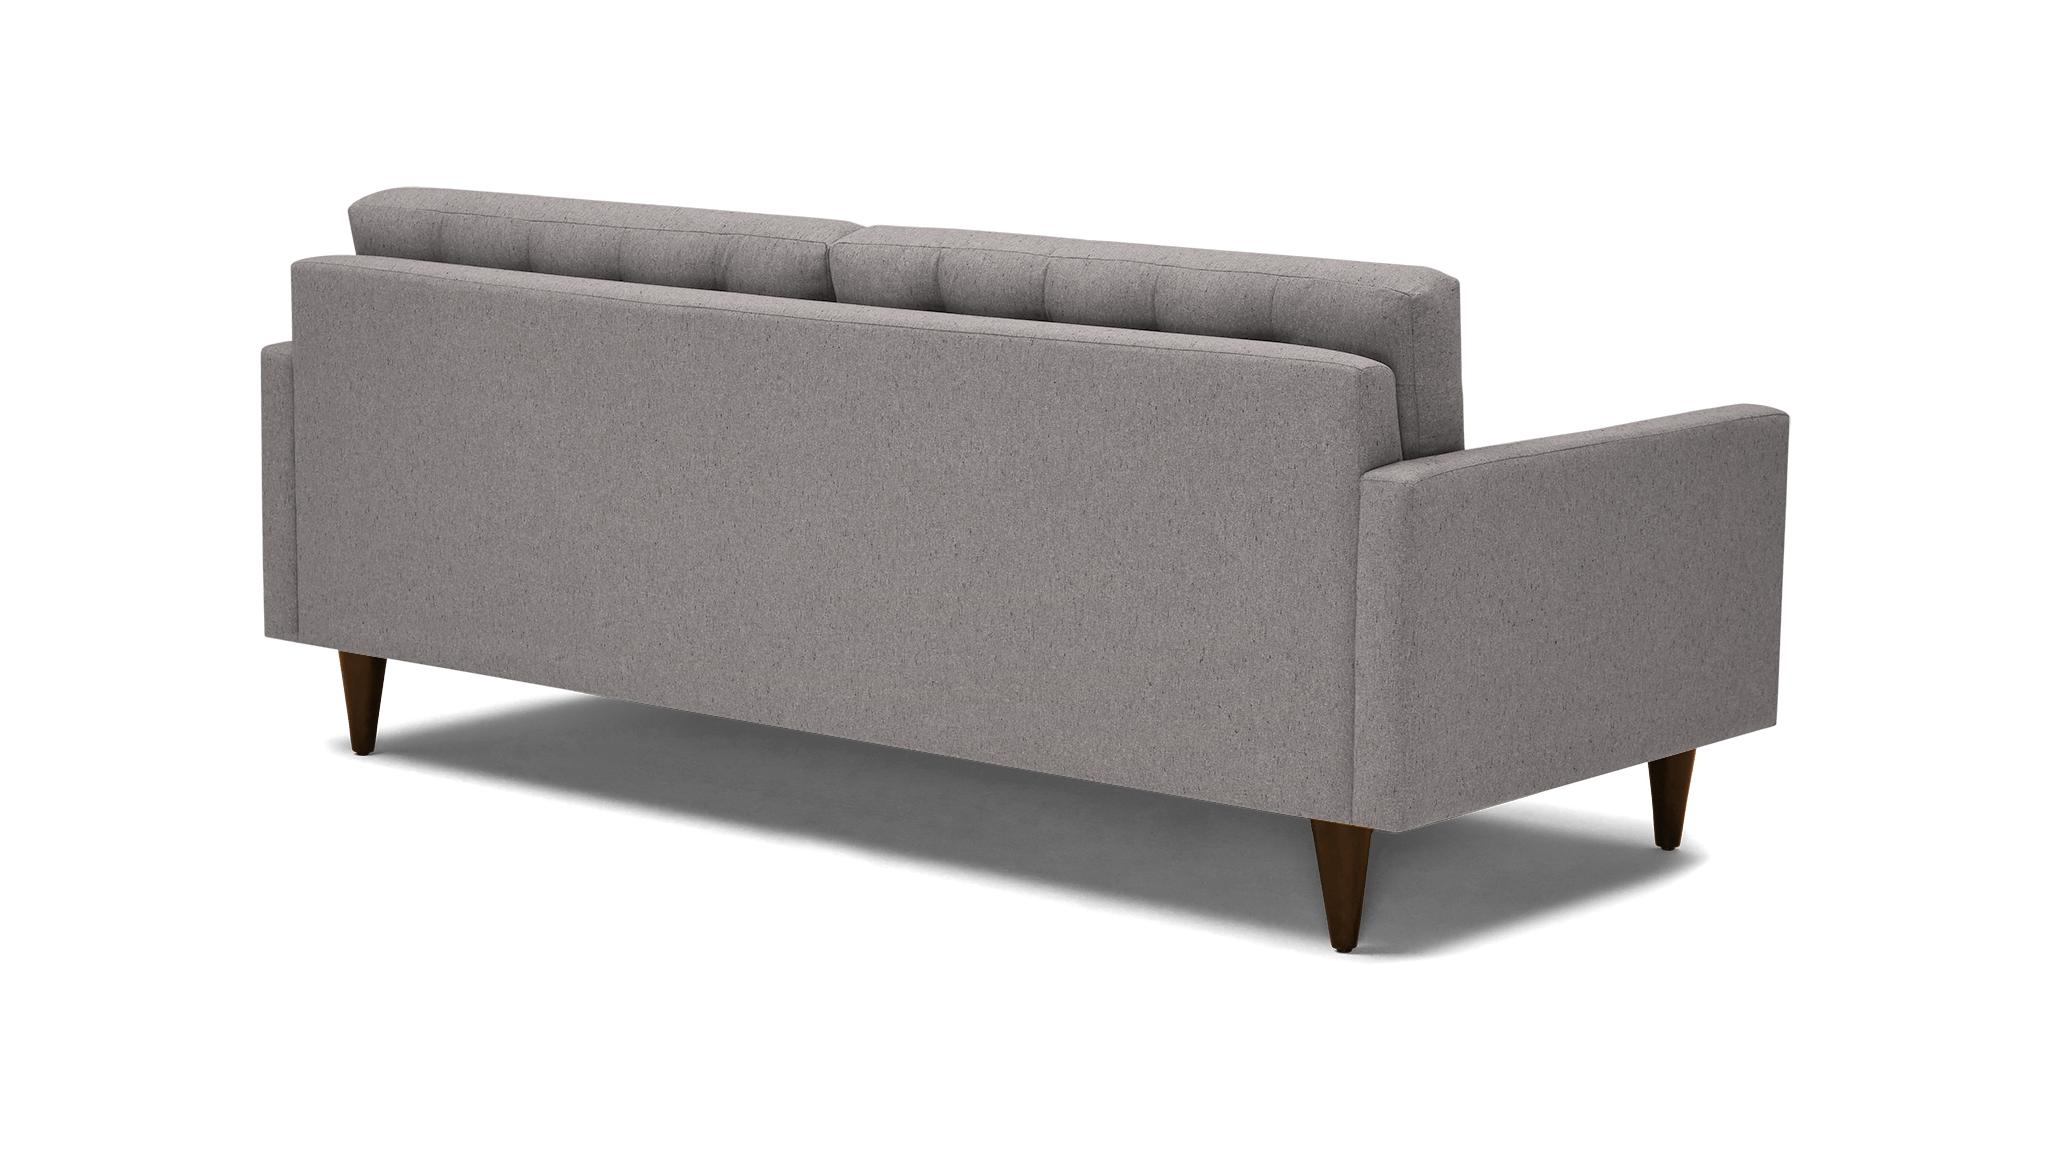 Purple Eliot Mid Century Modern Sofa - Sunbrella Premier Wisteria - Mocha - Image 3